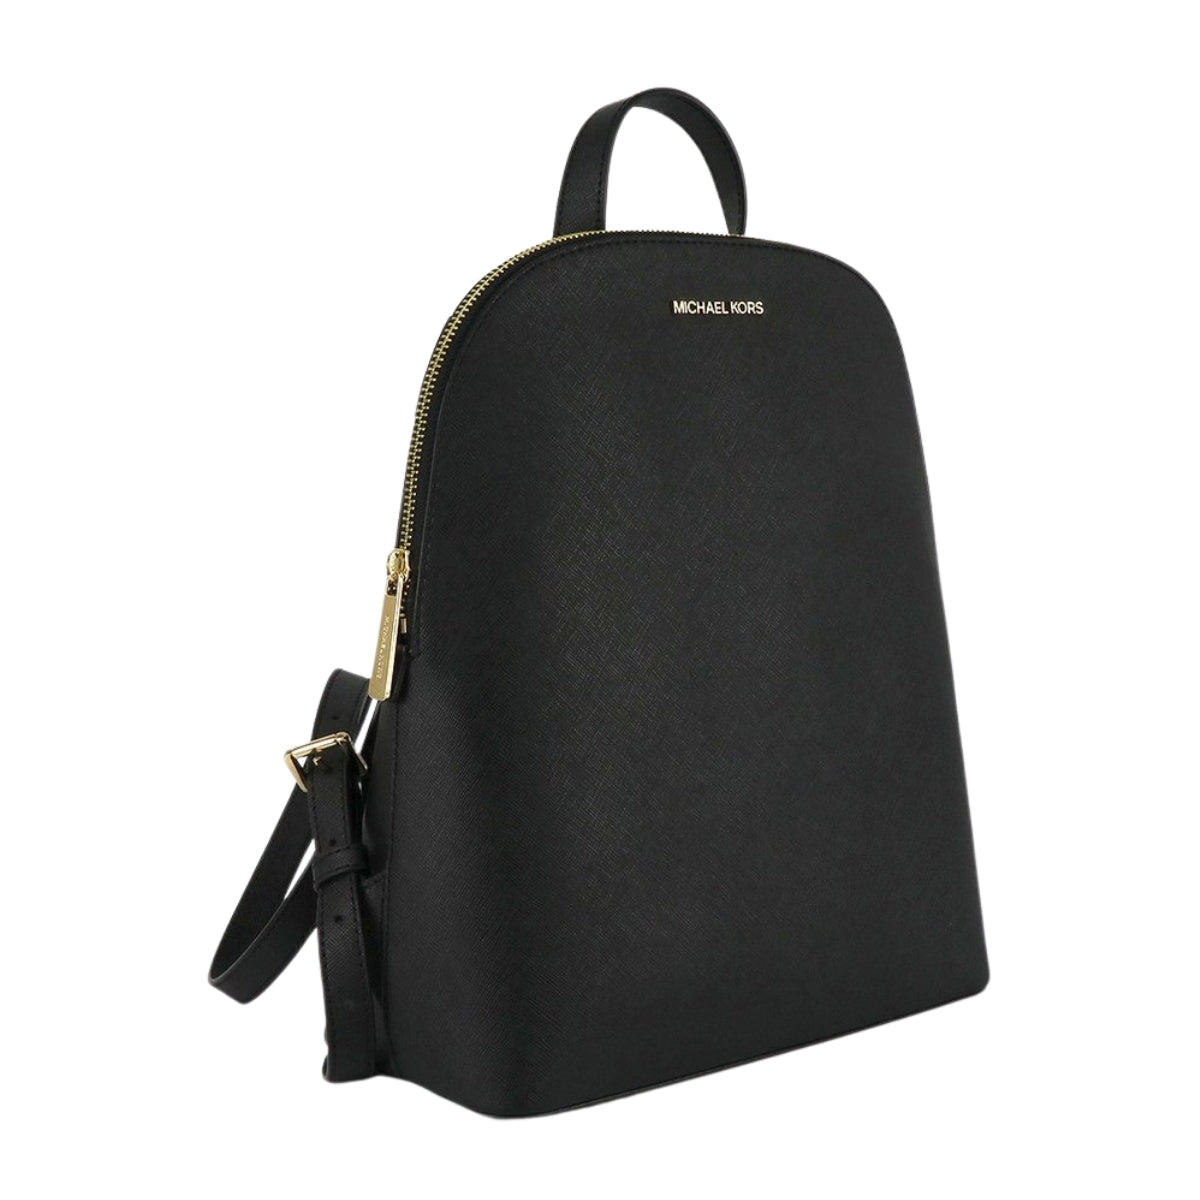 Cartera Michael Kors CINDY Backpack Leather Lg BlackColor BLACK